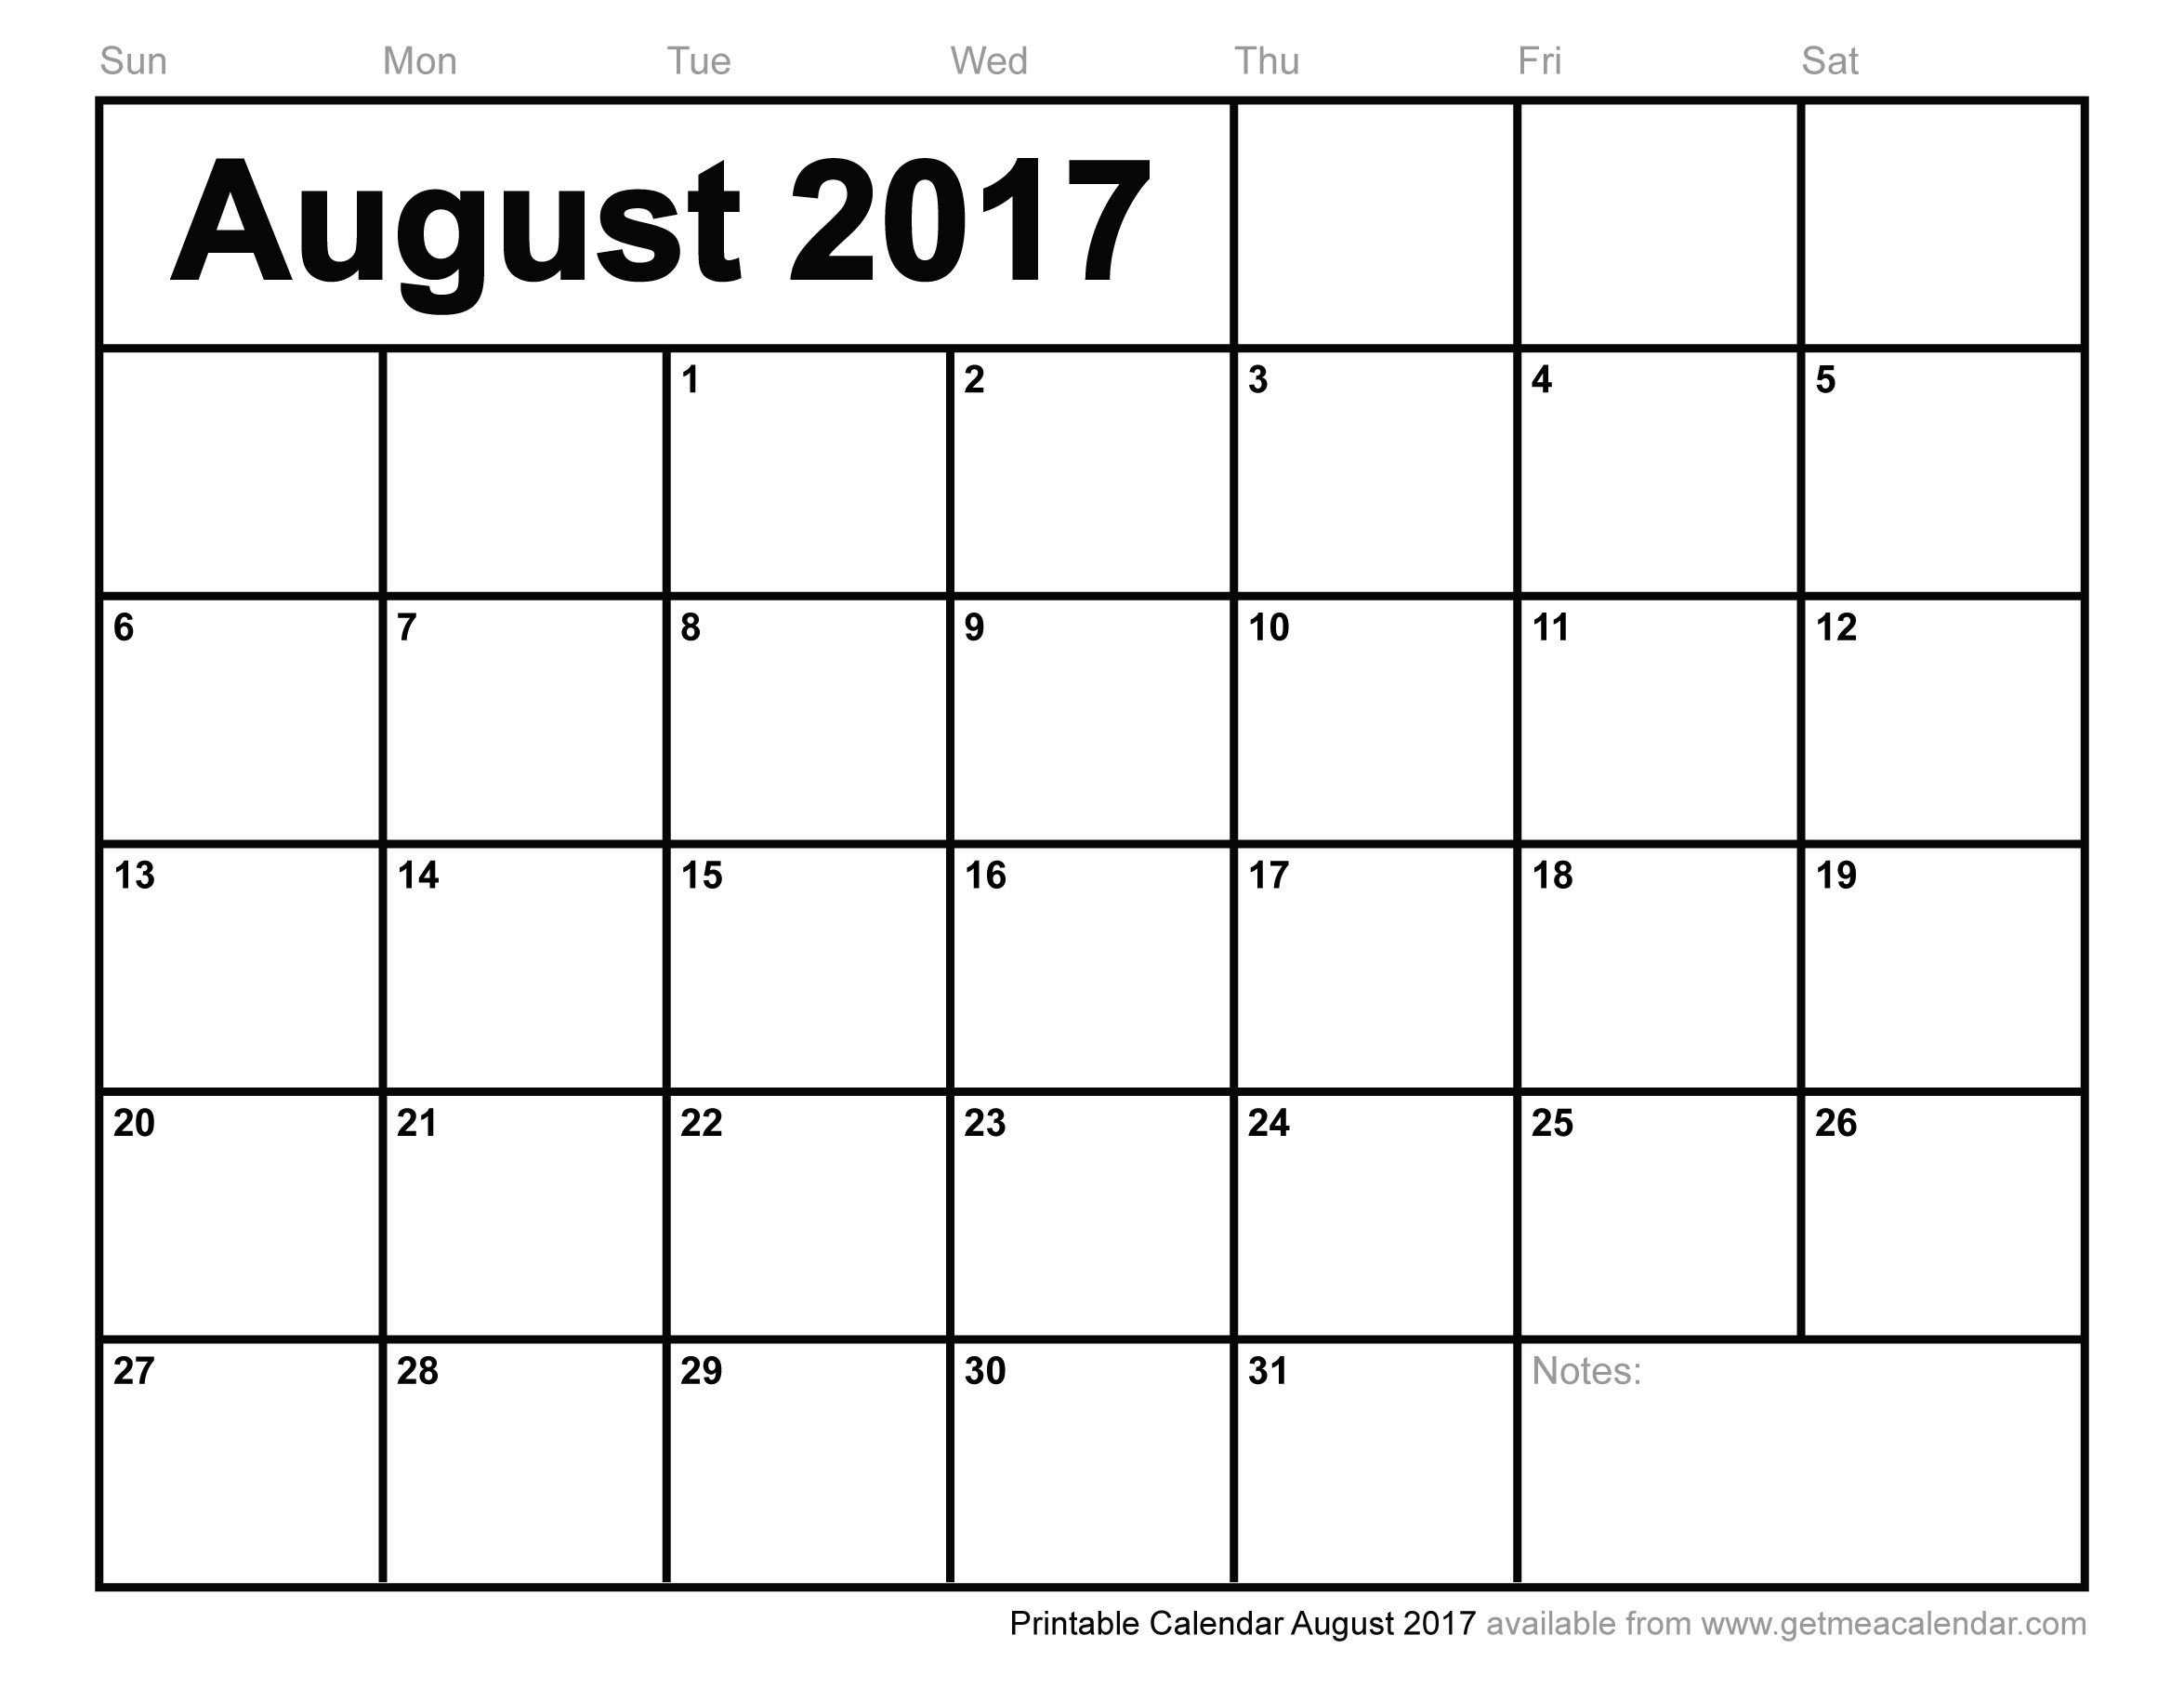 Printable Calendar August 2017 - Free Printable August 2017